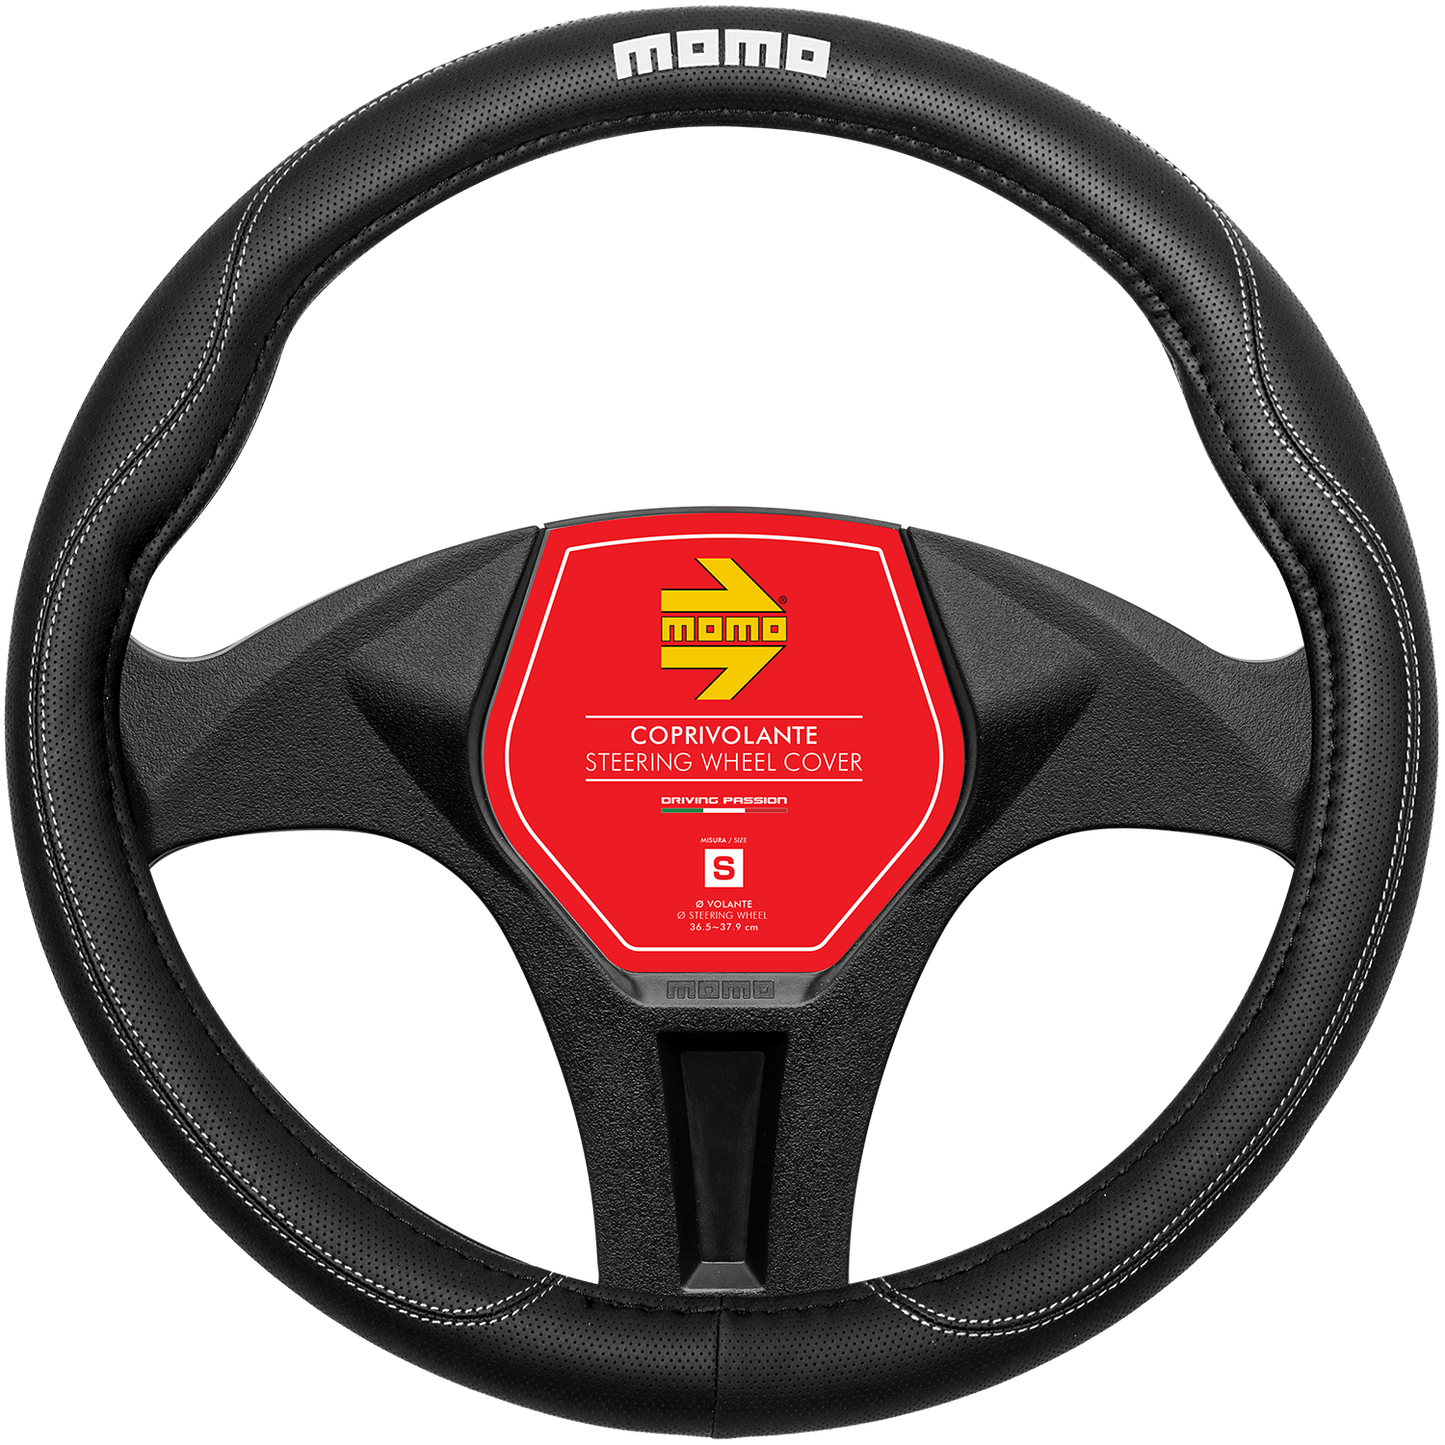 Momo Steering Wheel Cover - COMFORT - BLACK/WHITE PU - SIZE M